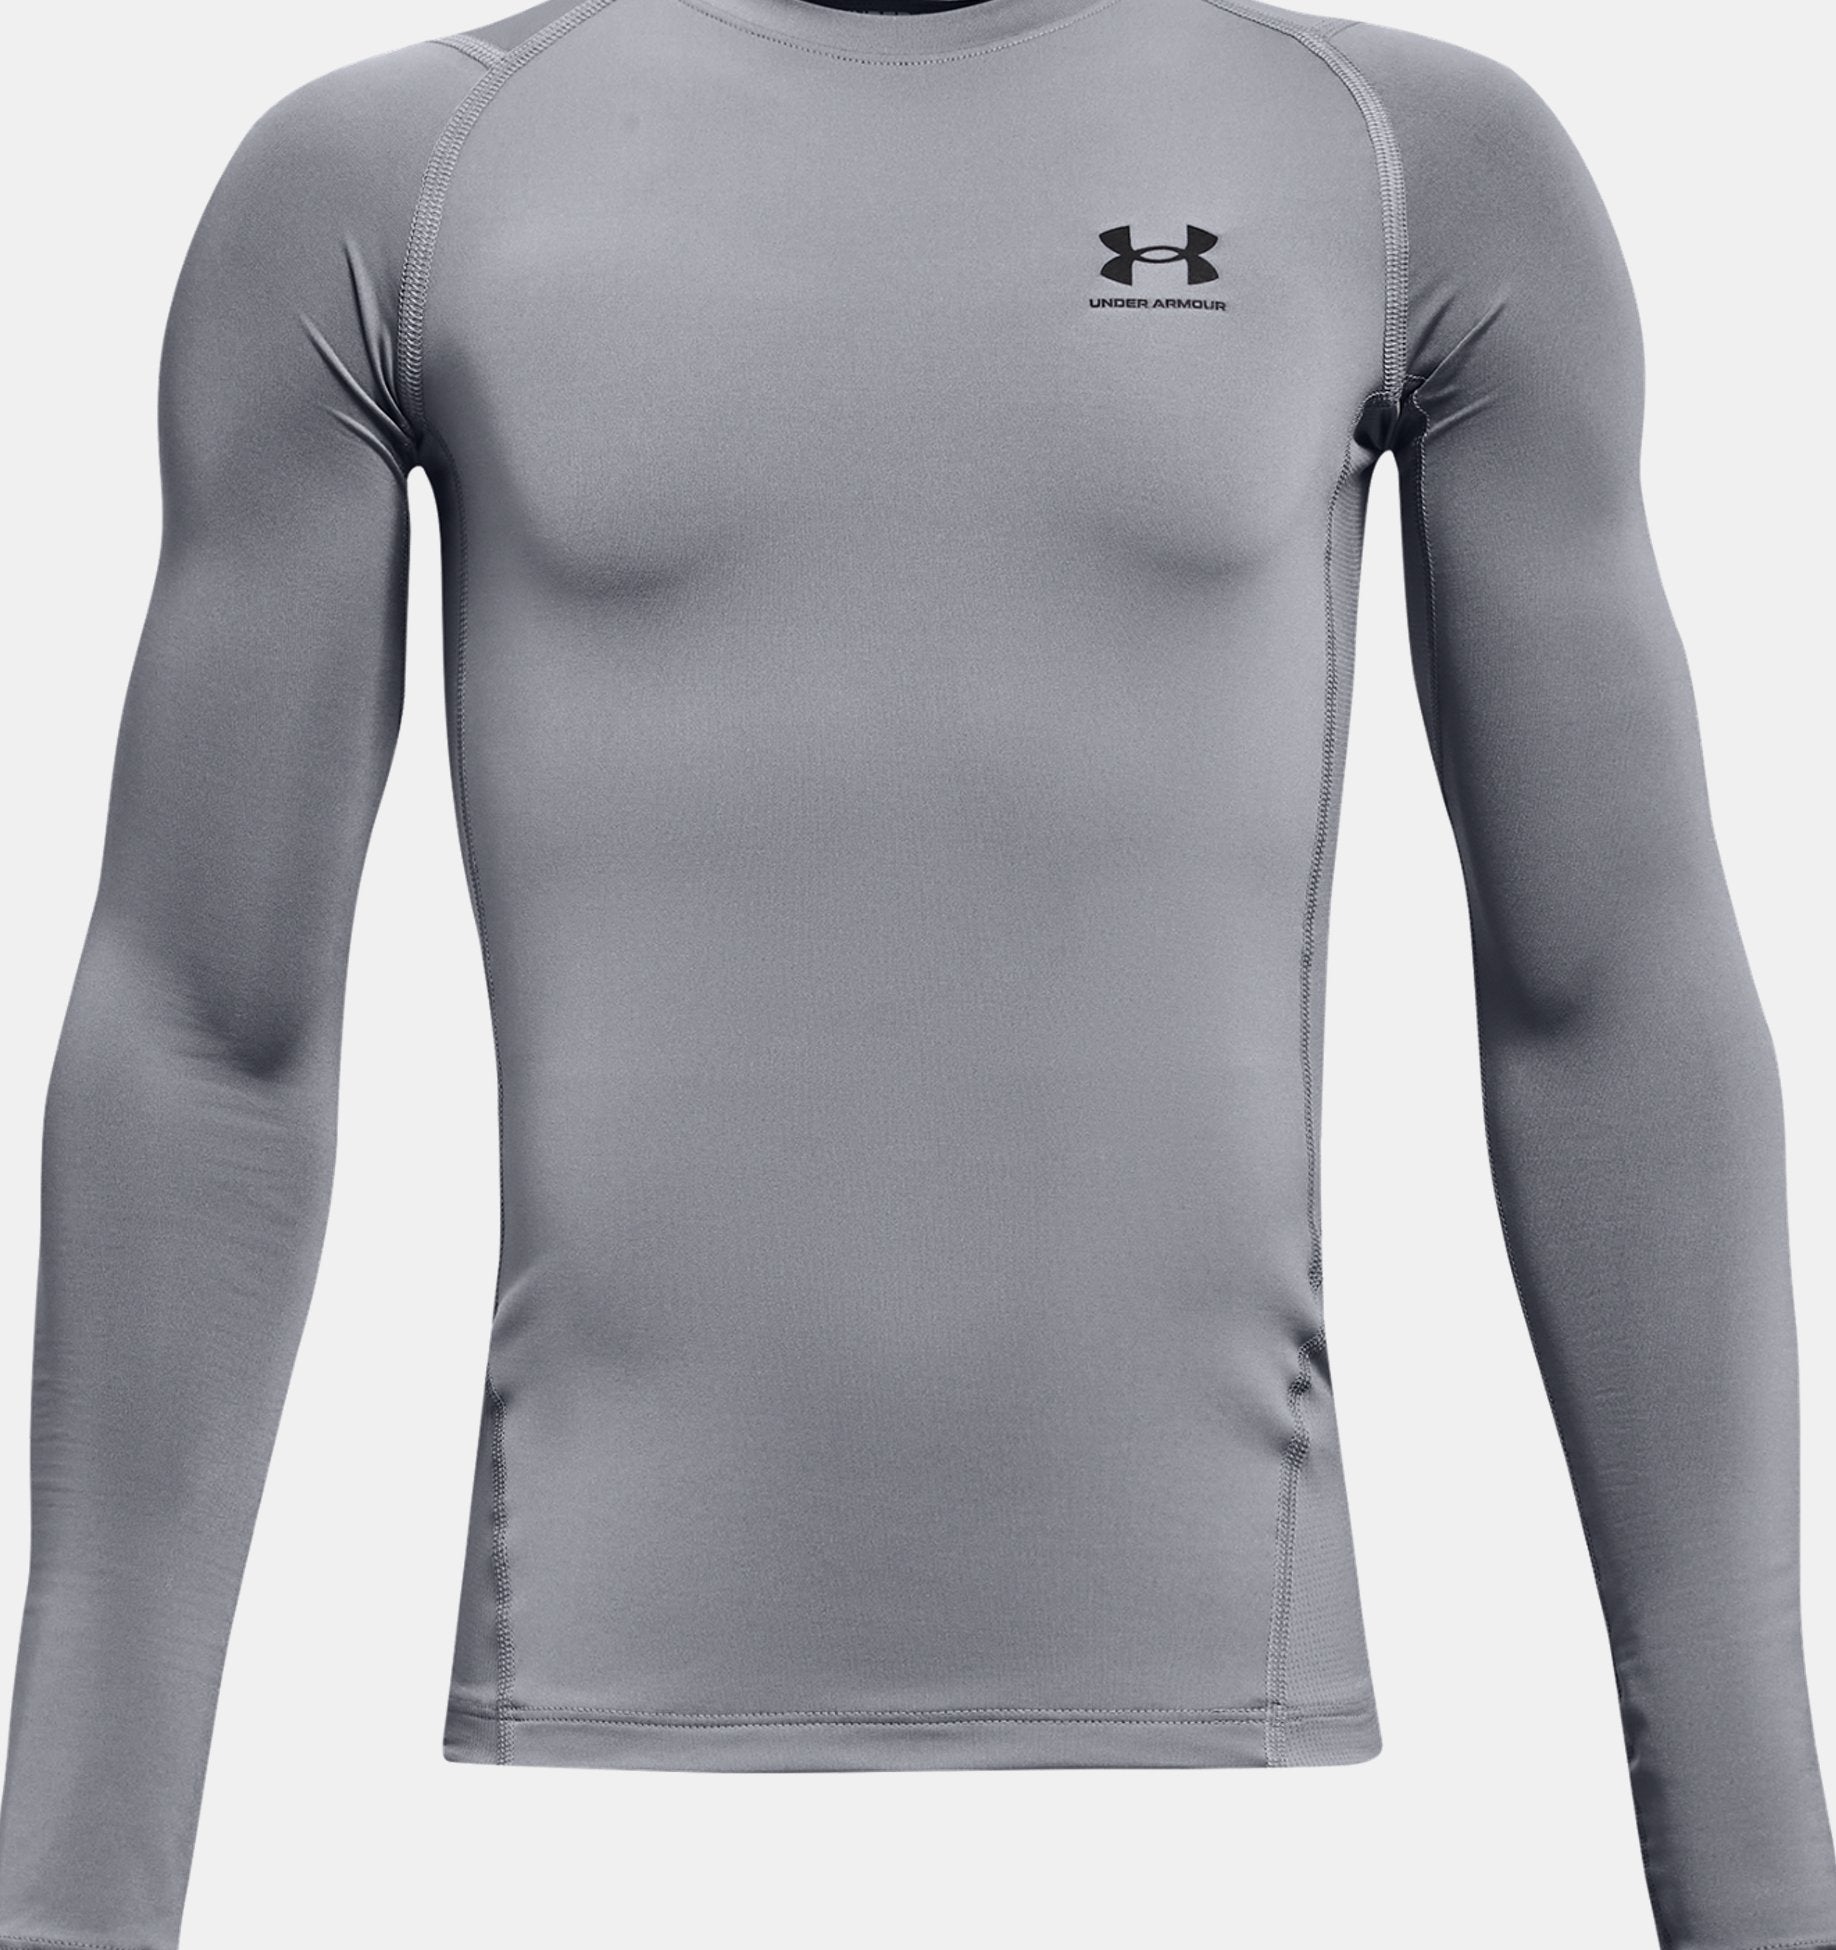 Under Armour Boys' HeatGear Long-Sleeve Compression Shirt